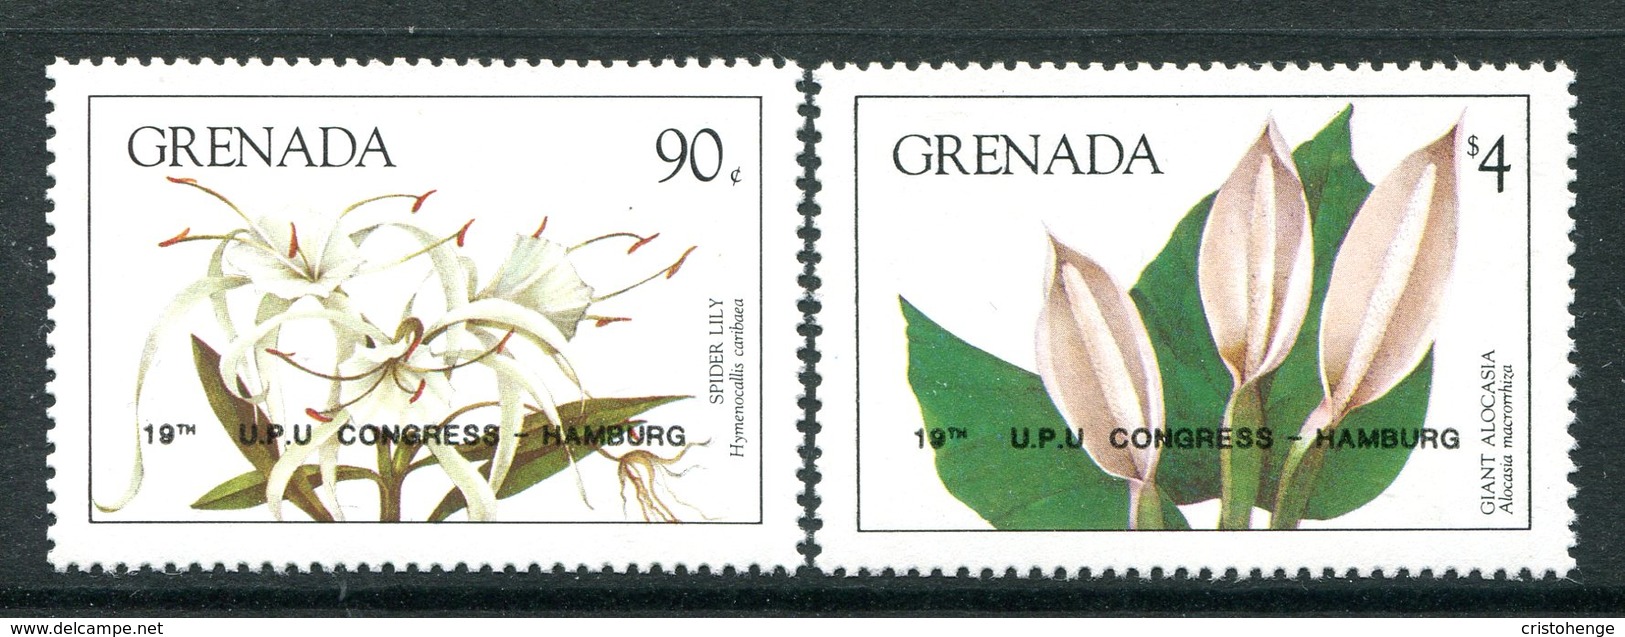 Grenada 1984 UPU Congress, Hamburg - Flowers Overprint Set MNH (SG 1339-1340) - Grenada (1974-...)